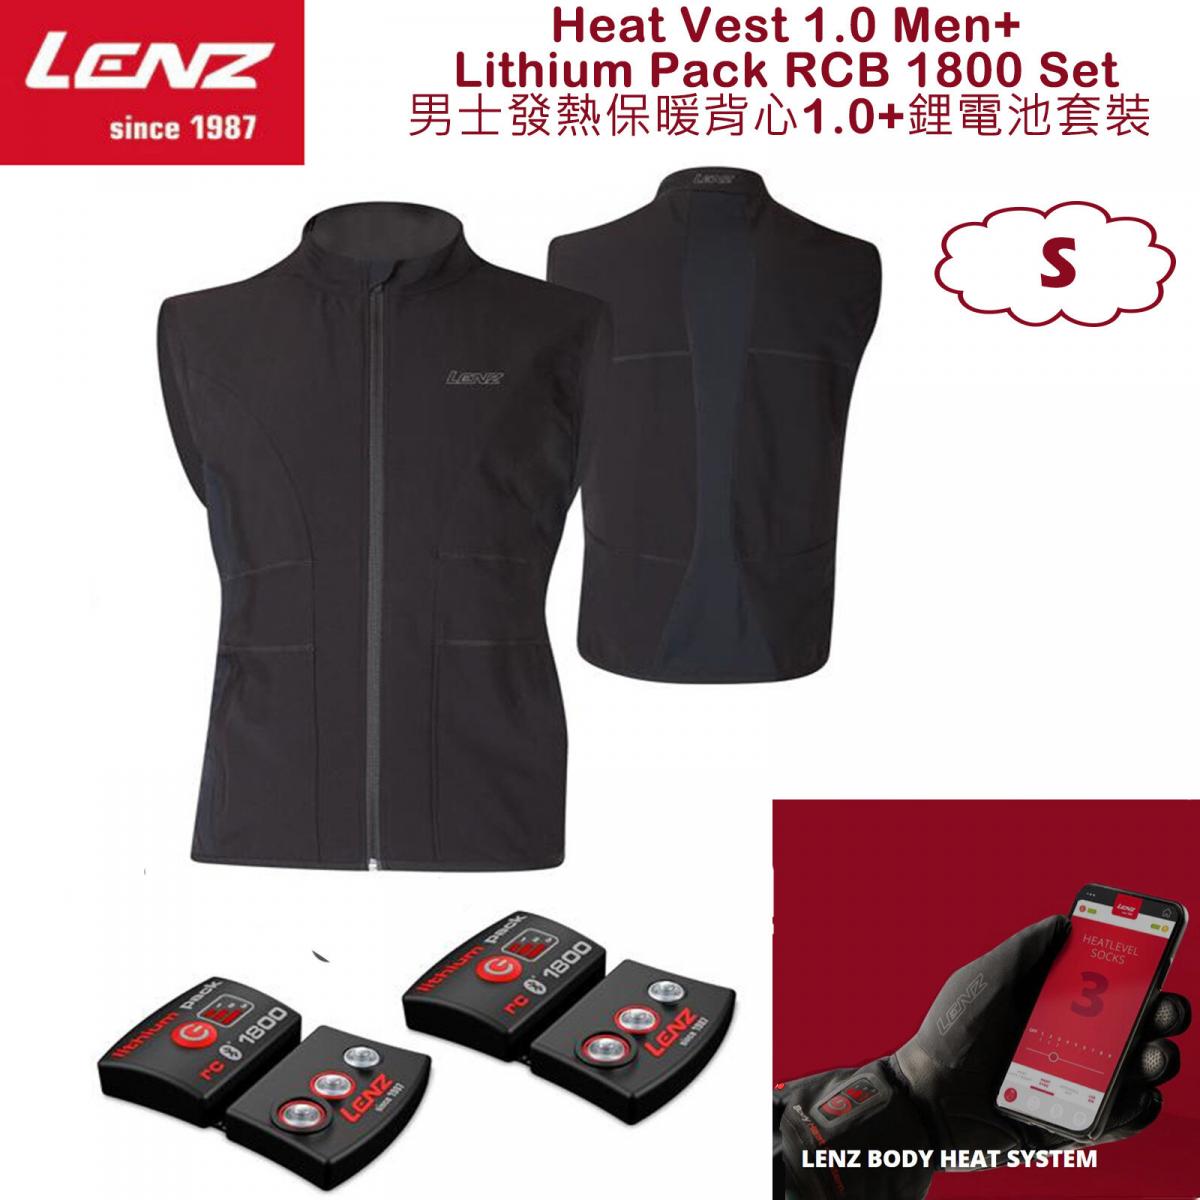 Heat Vest 1.0 Men and Lithium Pack RCB 1800 Set Size S